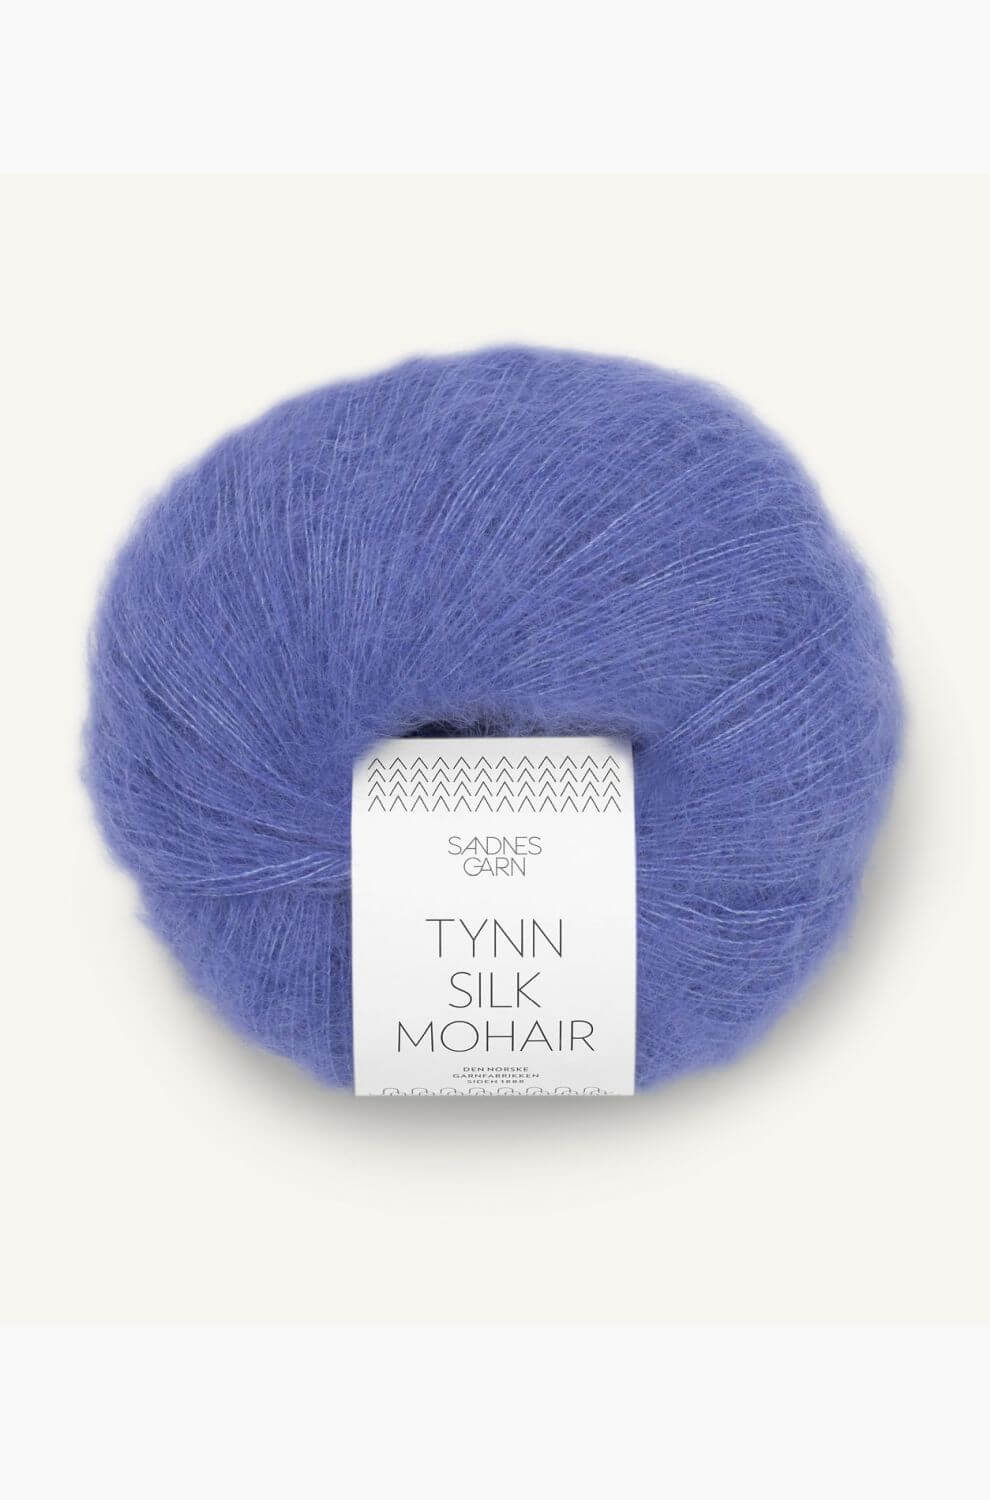 Silk + Mohiair blend yarn from Sandnes Garn